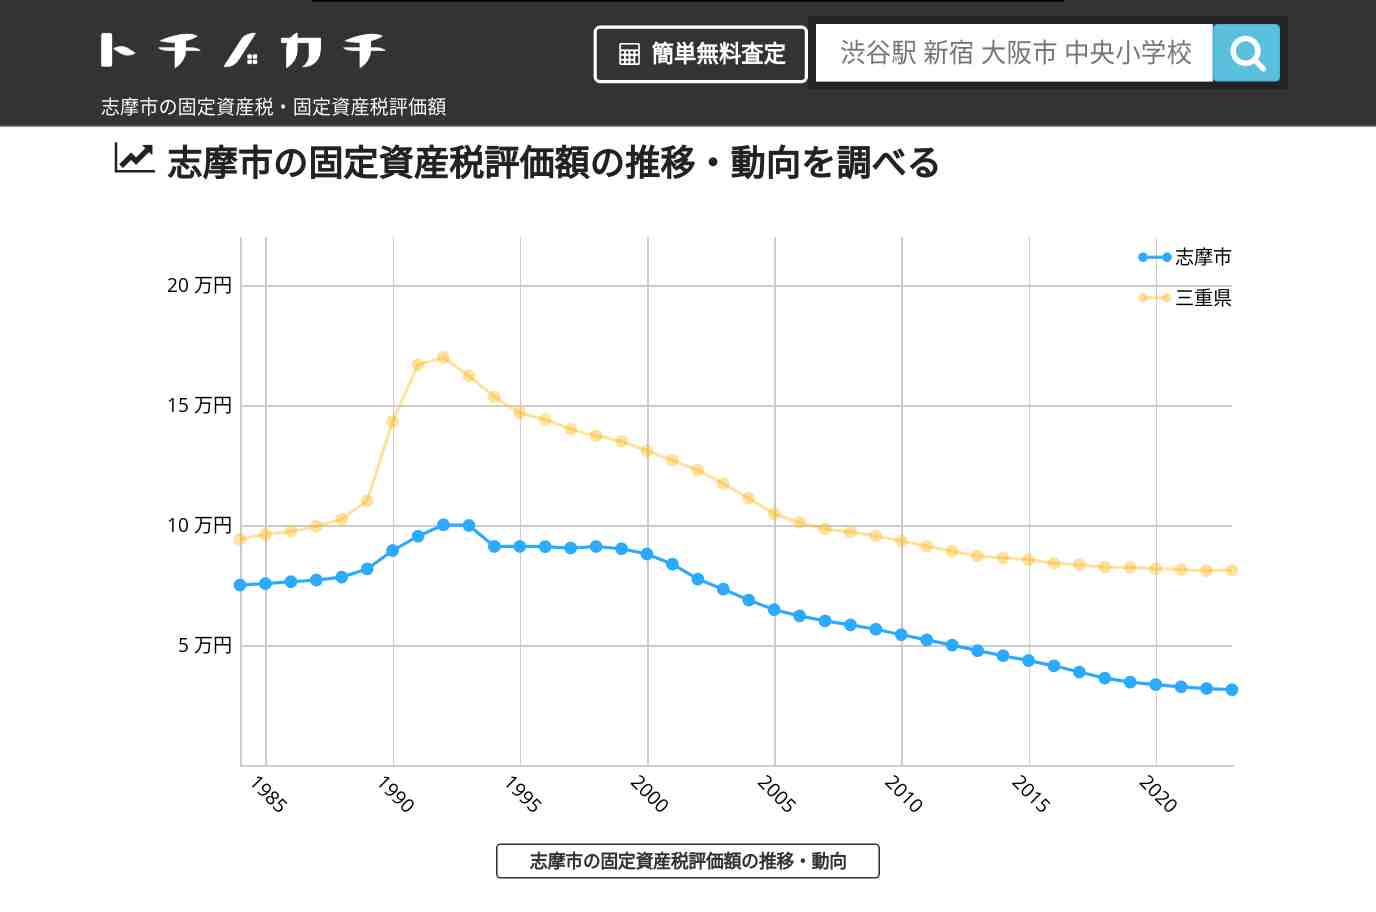 神明小学校(三重県 志摩市)周辺の固定資産税・固定資産税評価額 | トチノカチ